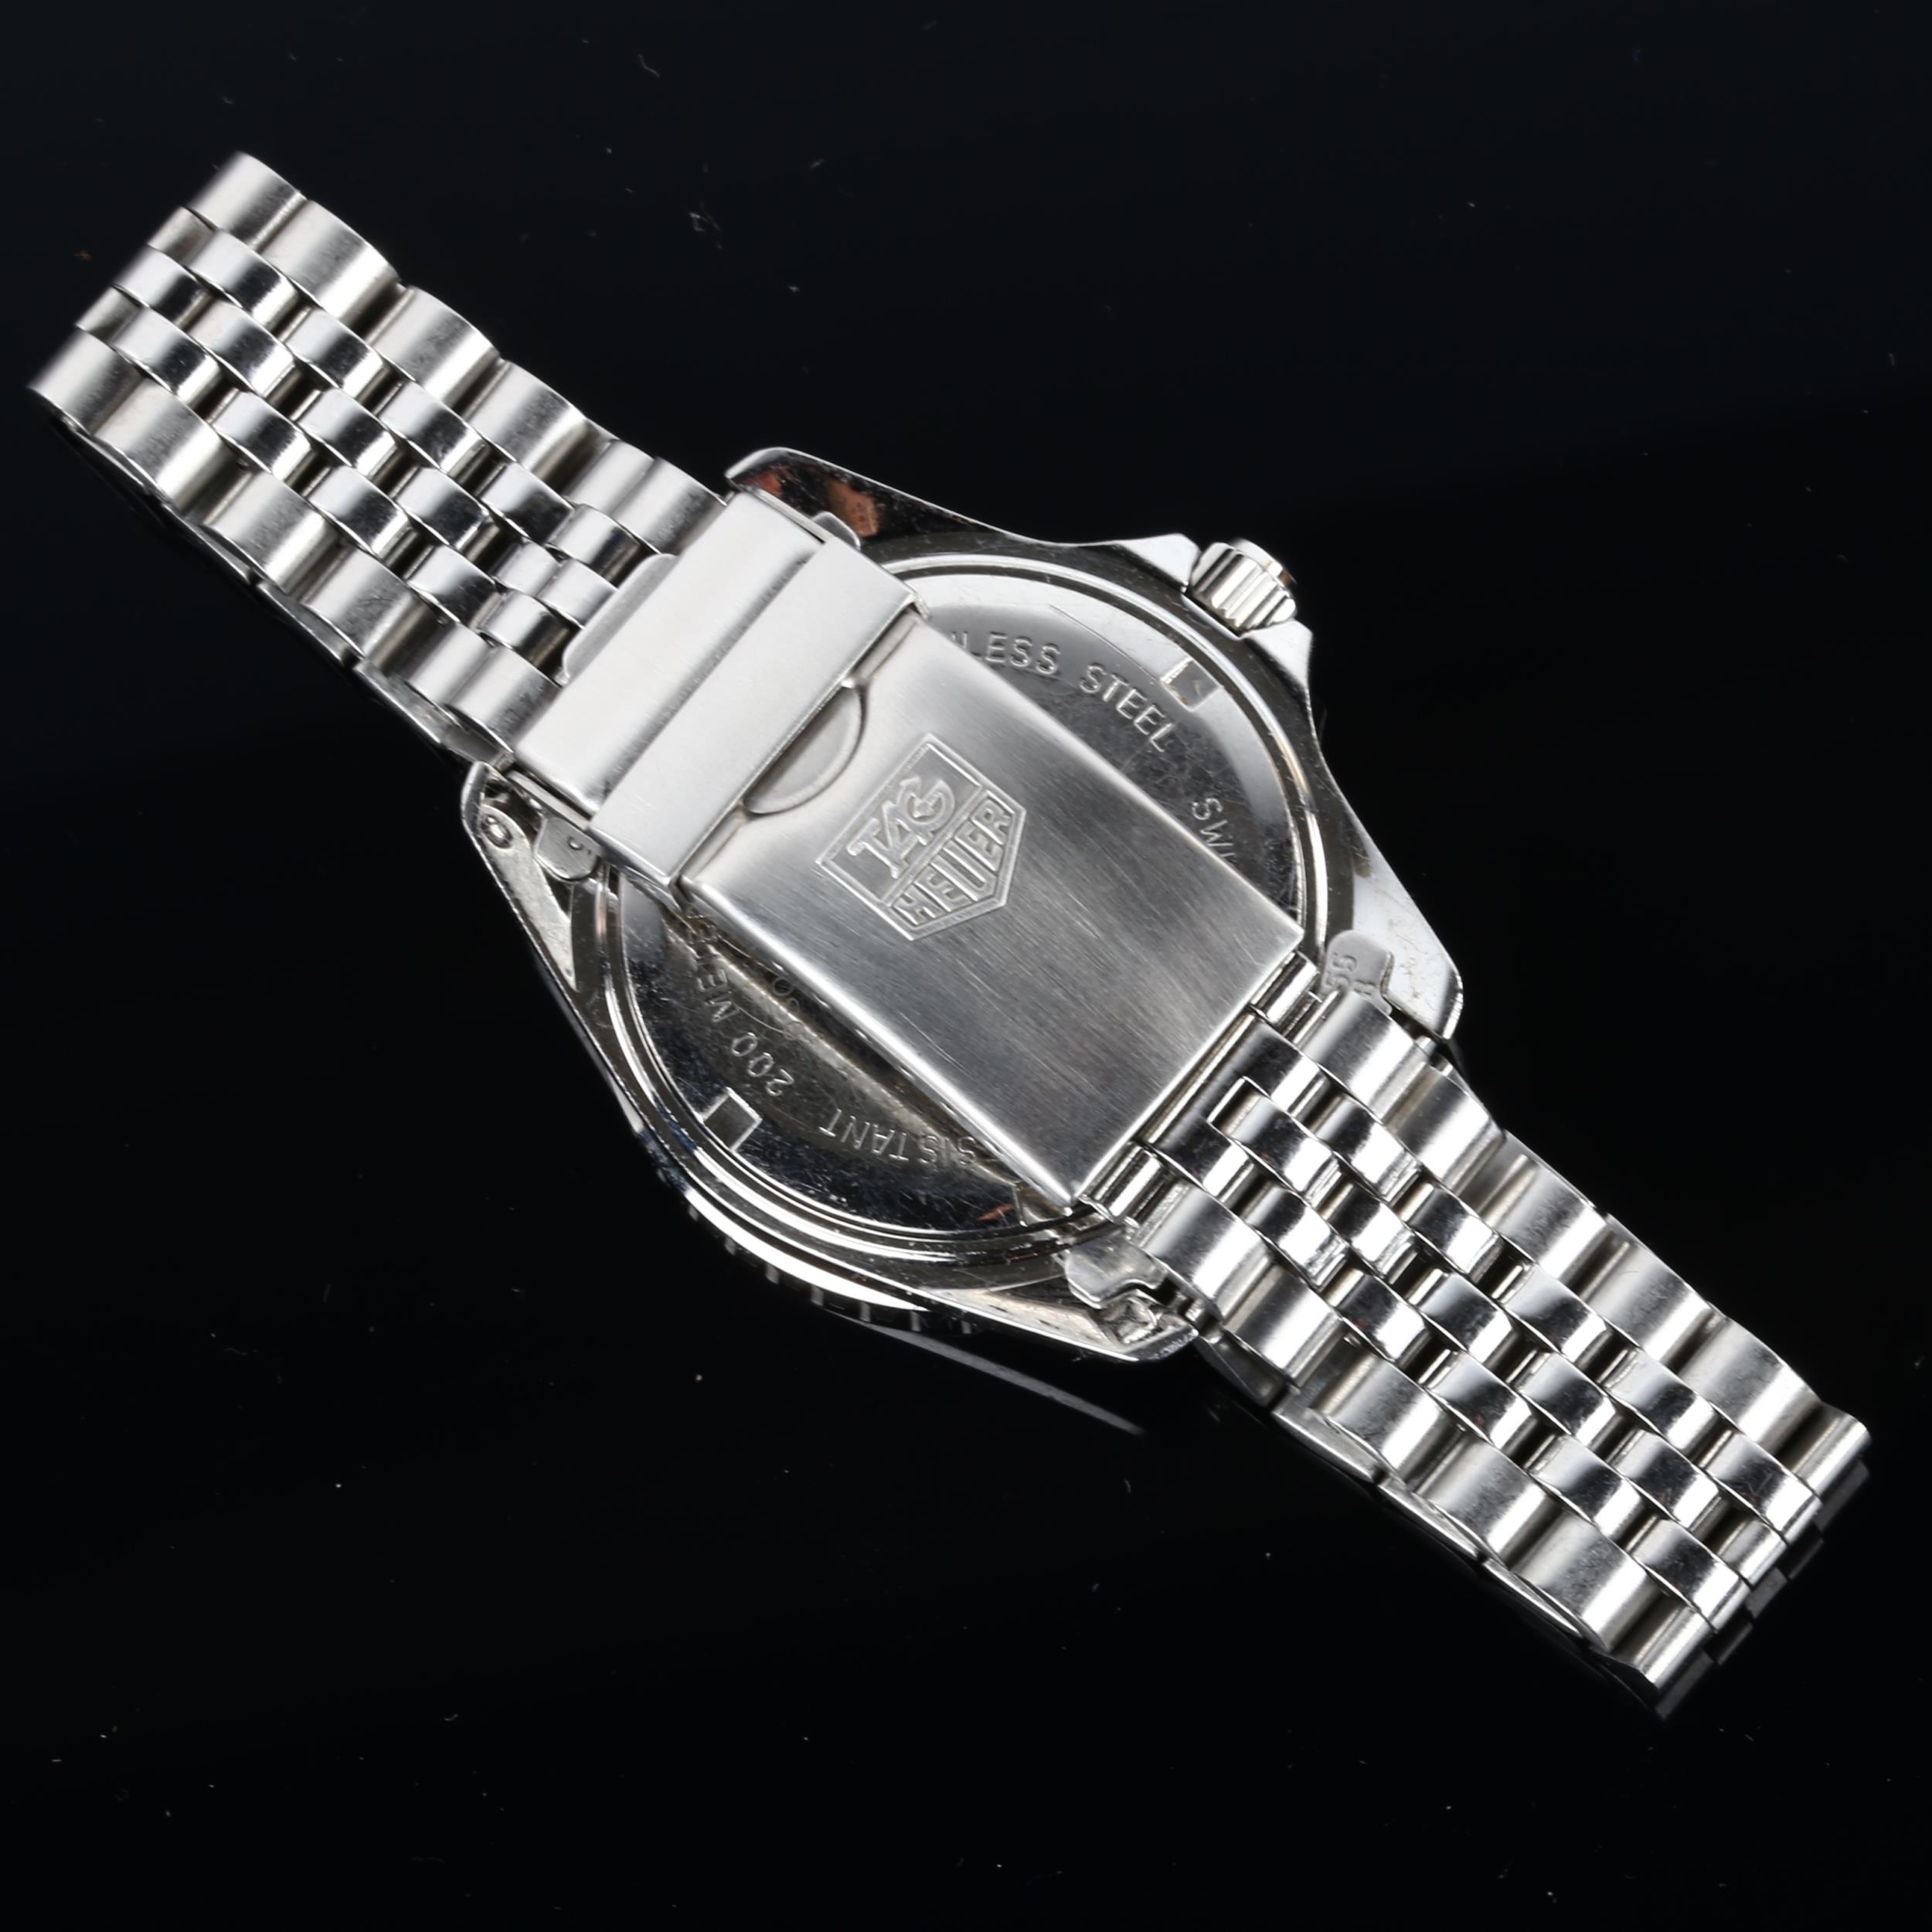 TAG HEUER - a Vintage stainless steel 1000 Professional 200M quartz bracelet watch, ref. 980.113N, - Image 3 of 5